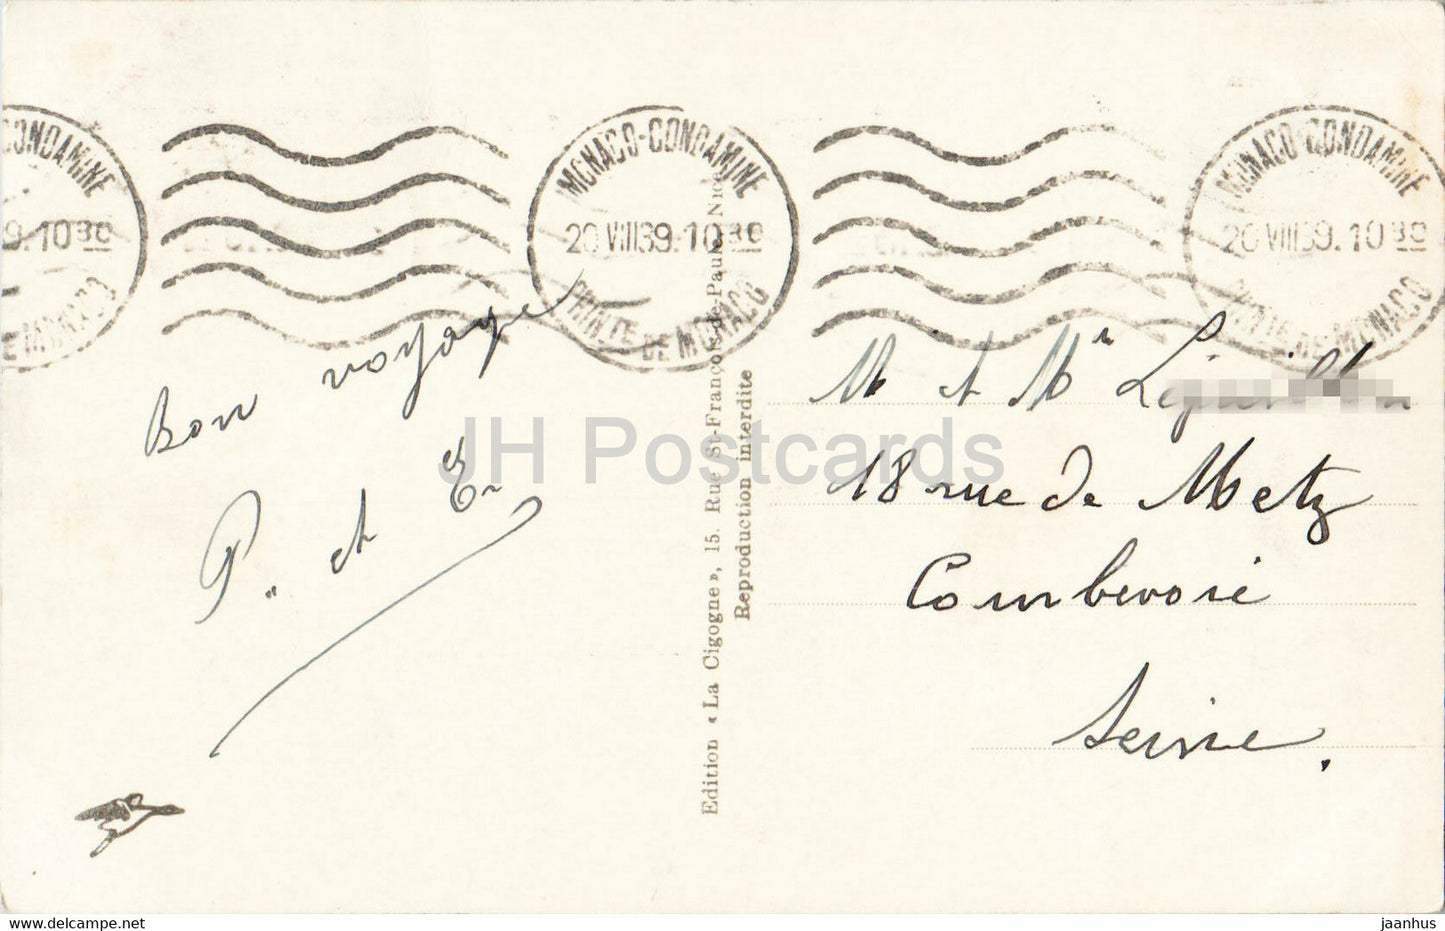 Monaco - Le Rocher - Vue sur Martin et l'Italie - 1495 - alte Postkarte - 1939 - Monaco - gebraucht